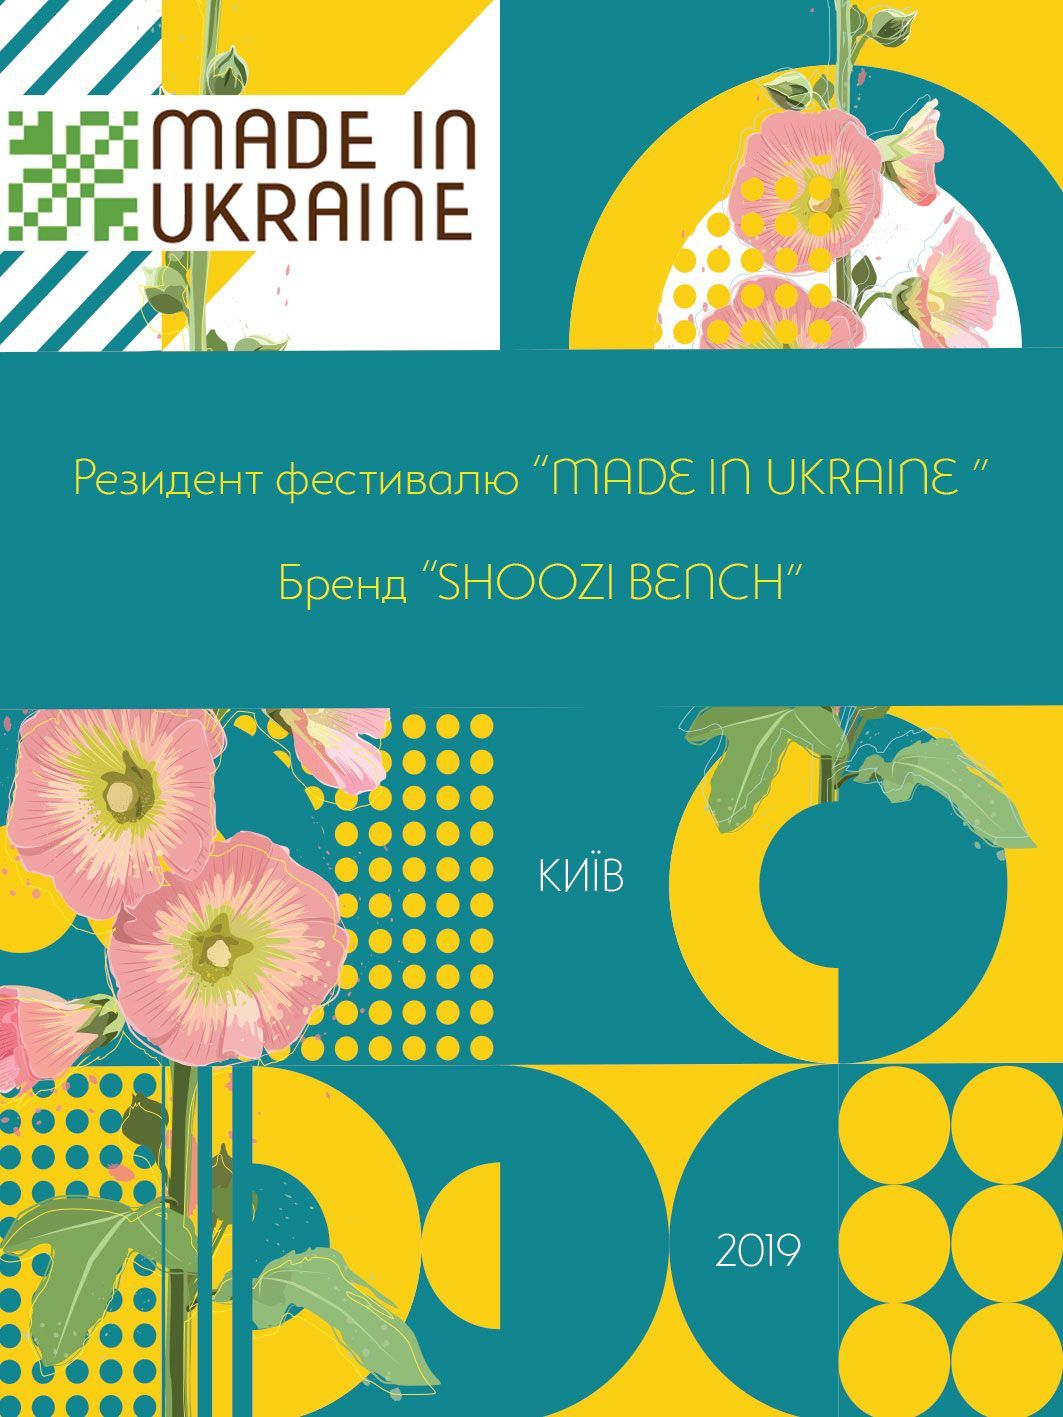 Сертификат участия в маркете "Made in UKRAINE"